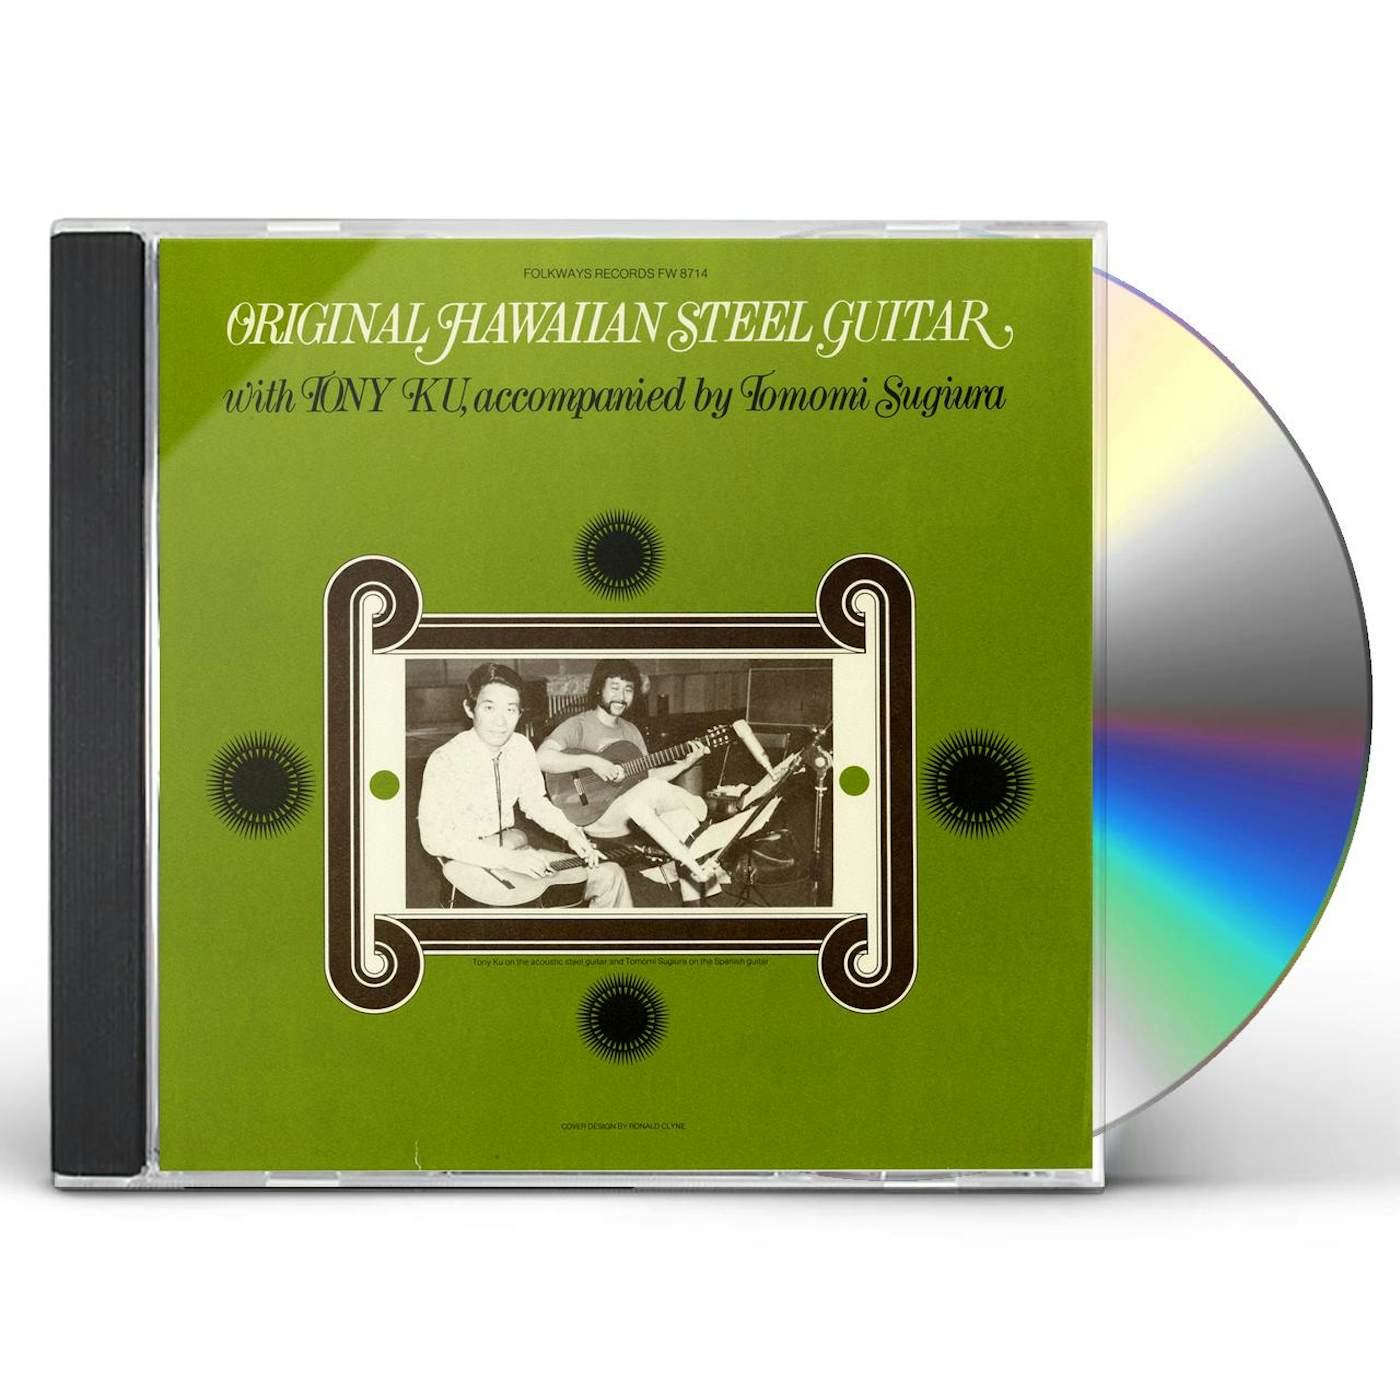 Tony Ku ORIGINAL HAWAIIAN STEEL GUITAR CD